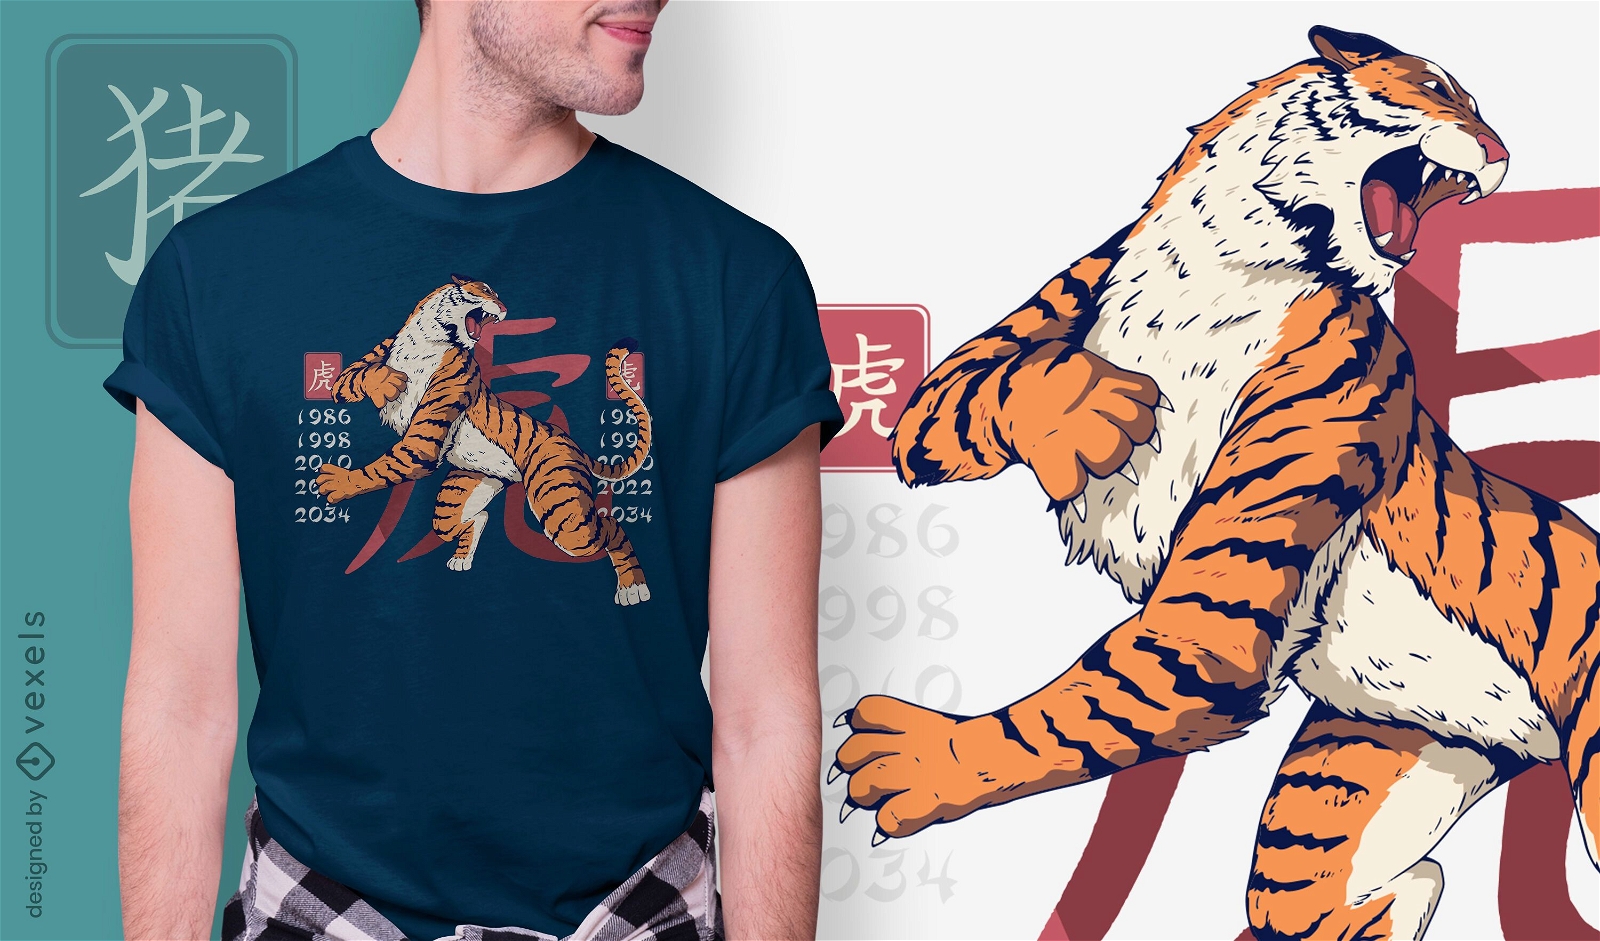 A?o del dise?o de la camiseta del tigre.